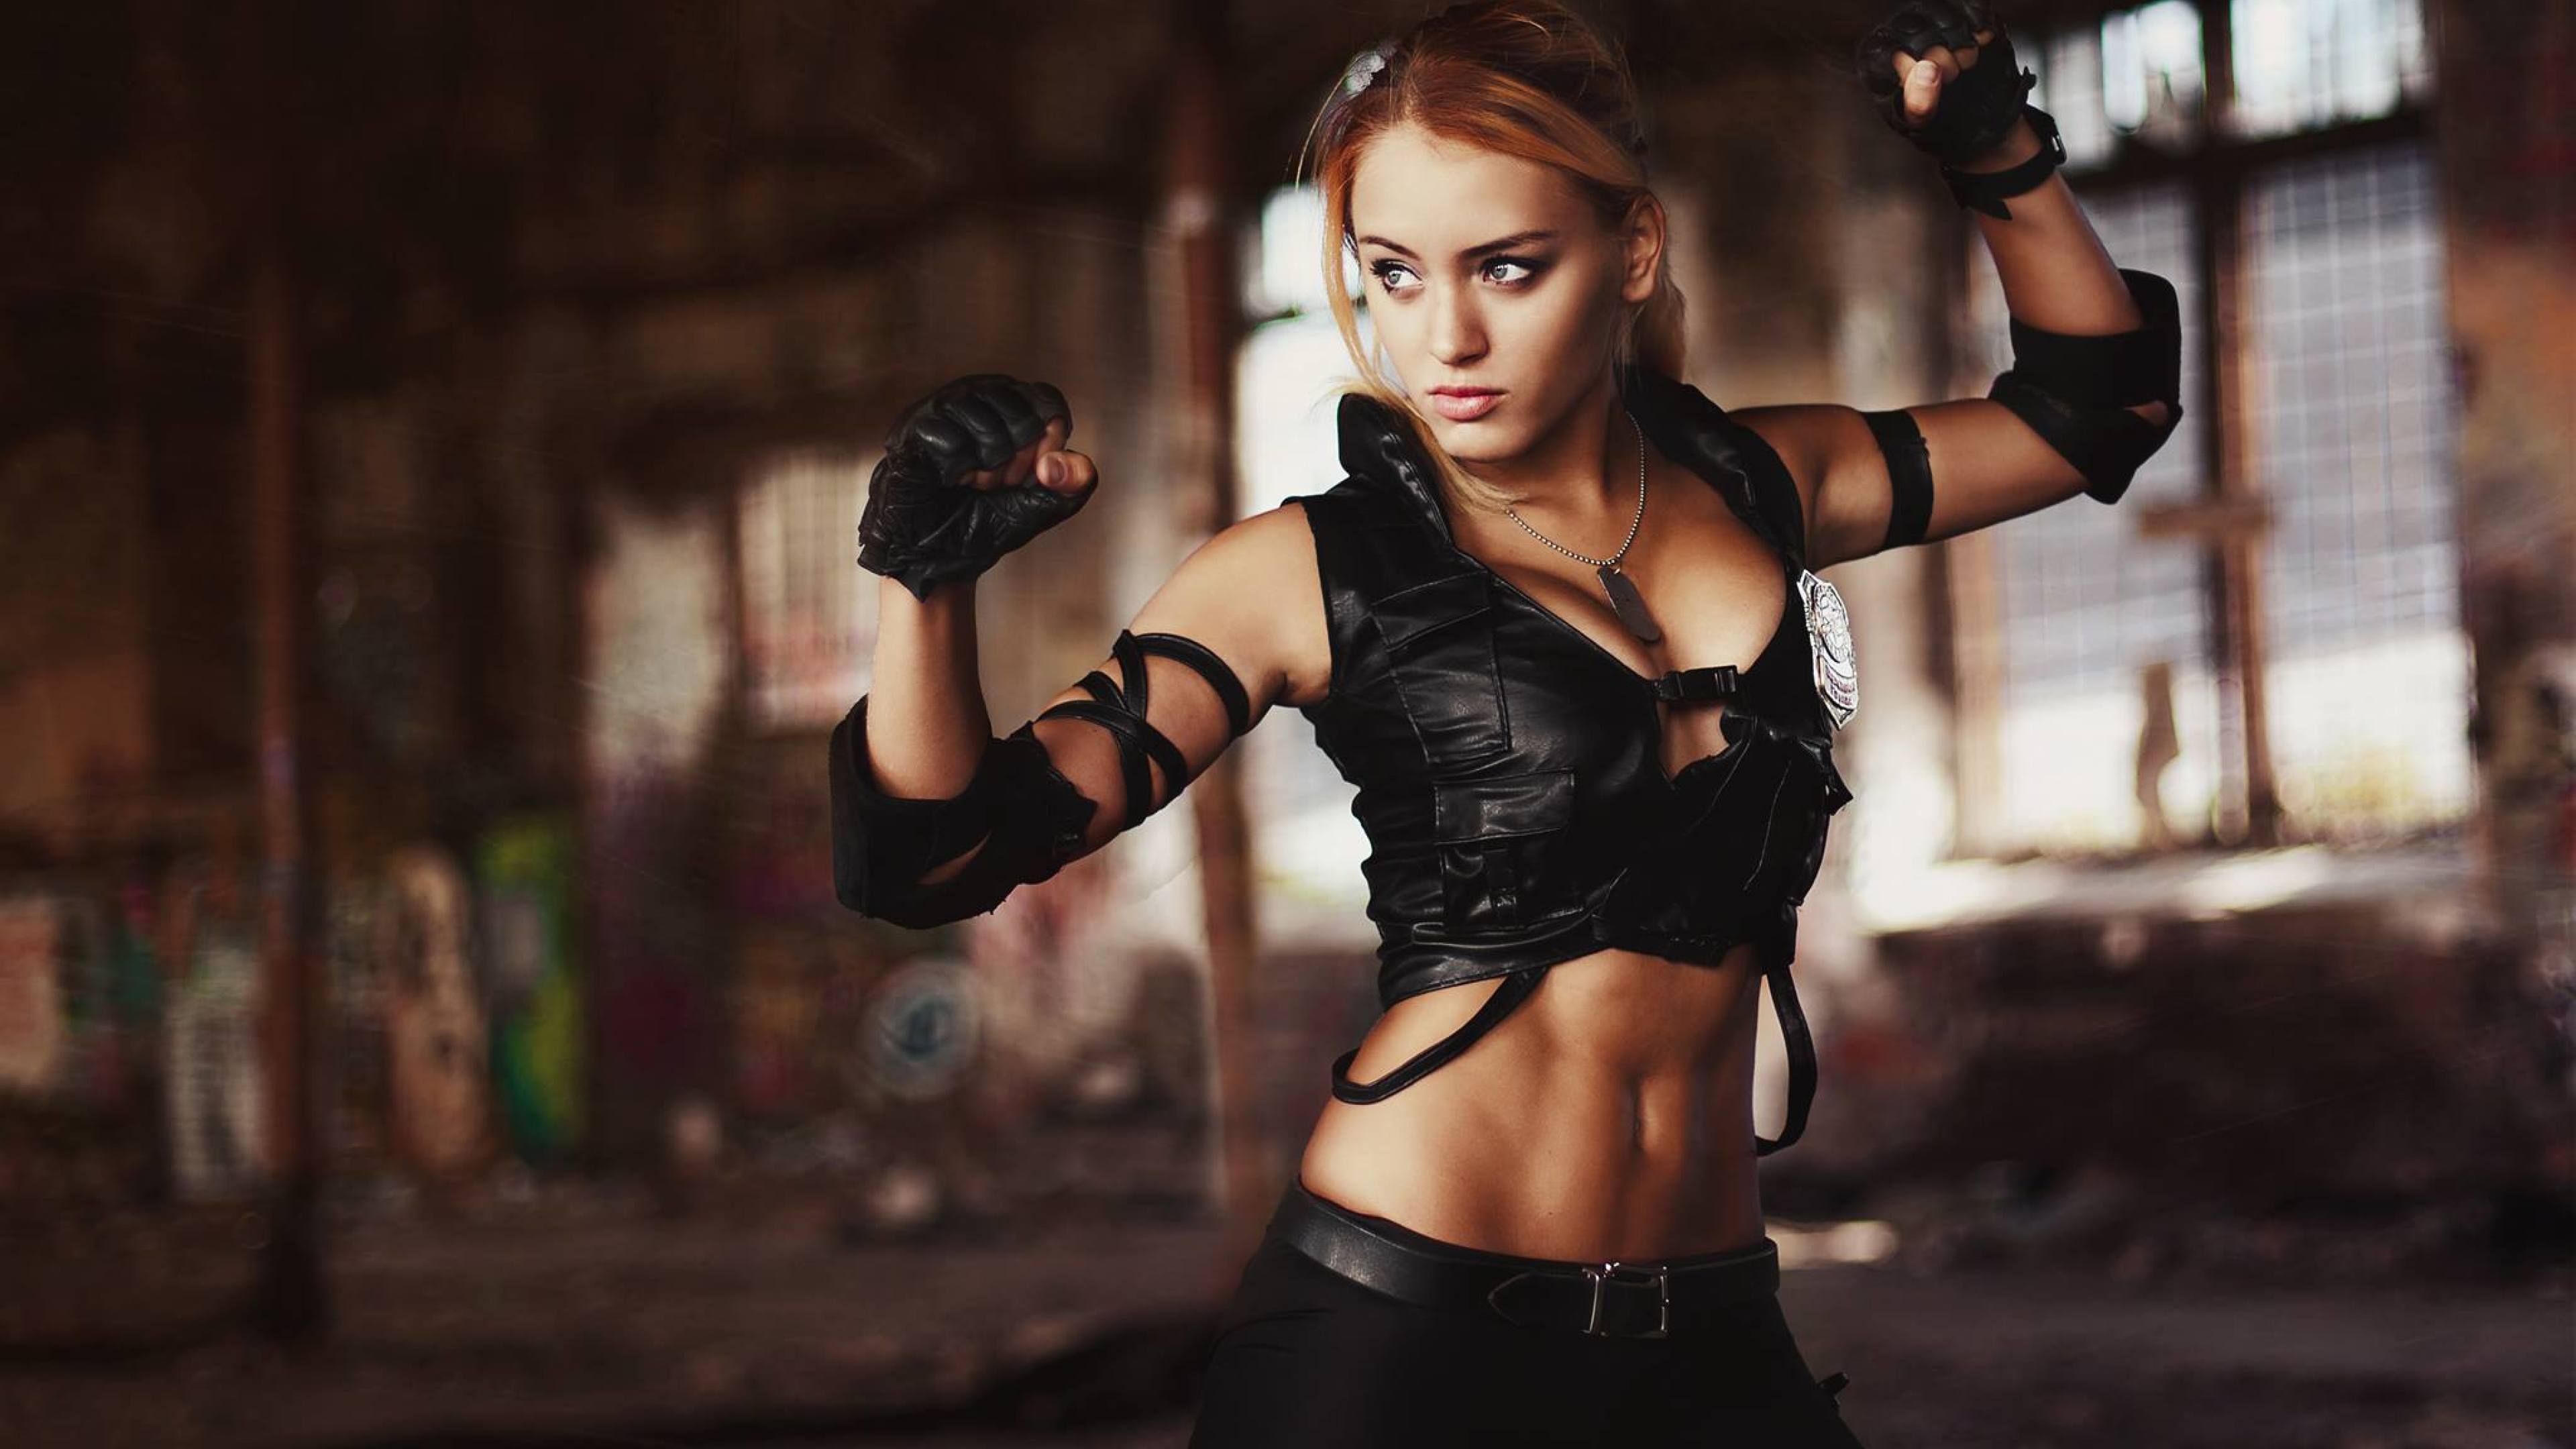 Sonya Blade Mortal Kombat Cosplay 4K Wallpaper, HD Girls 4K Wallpaper, Image, Photo and Background